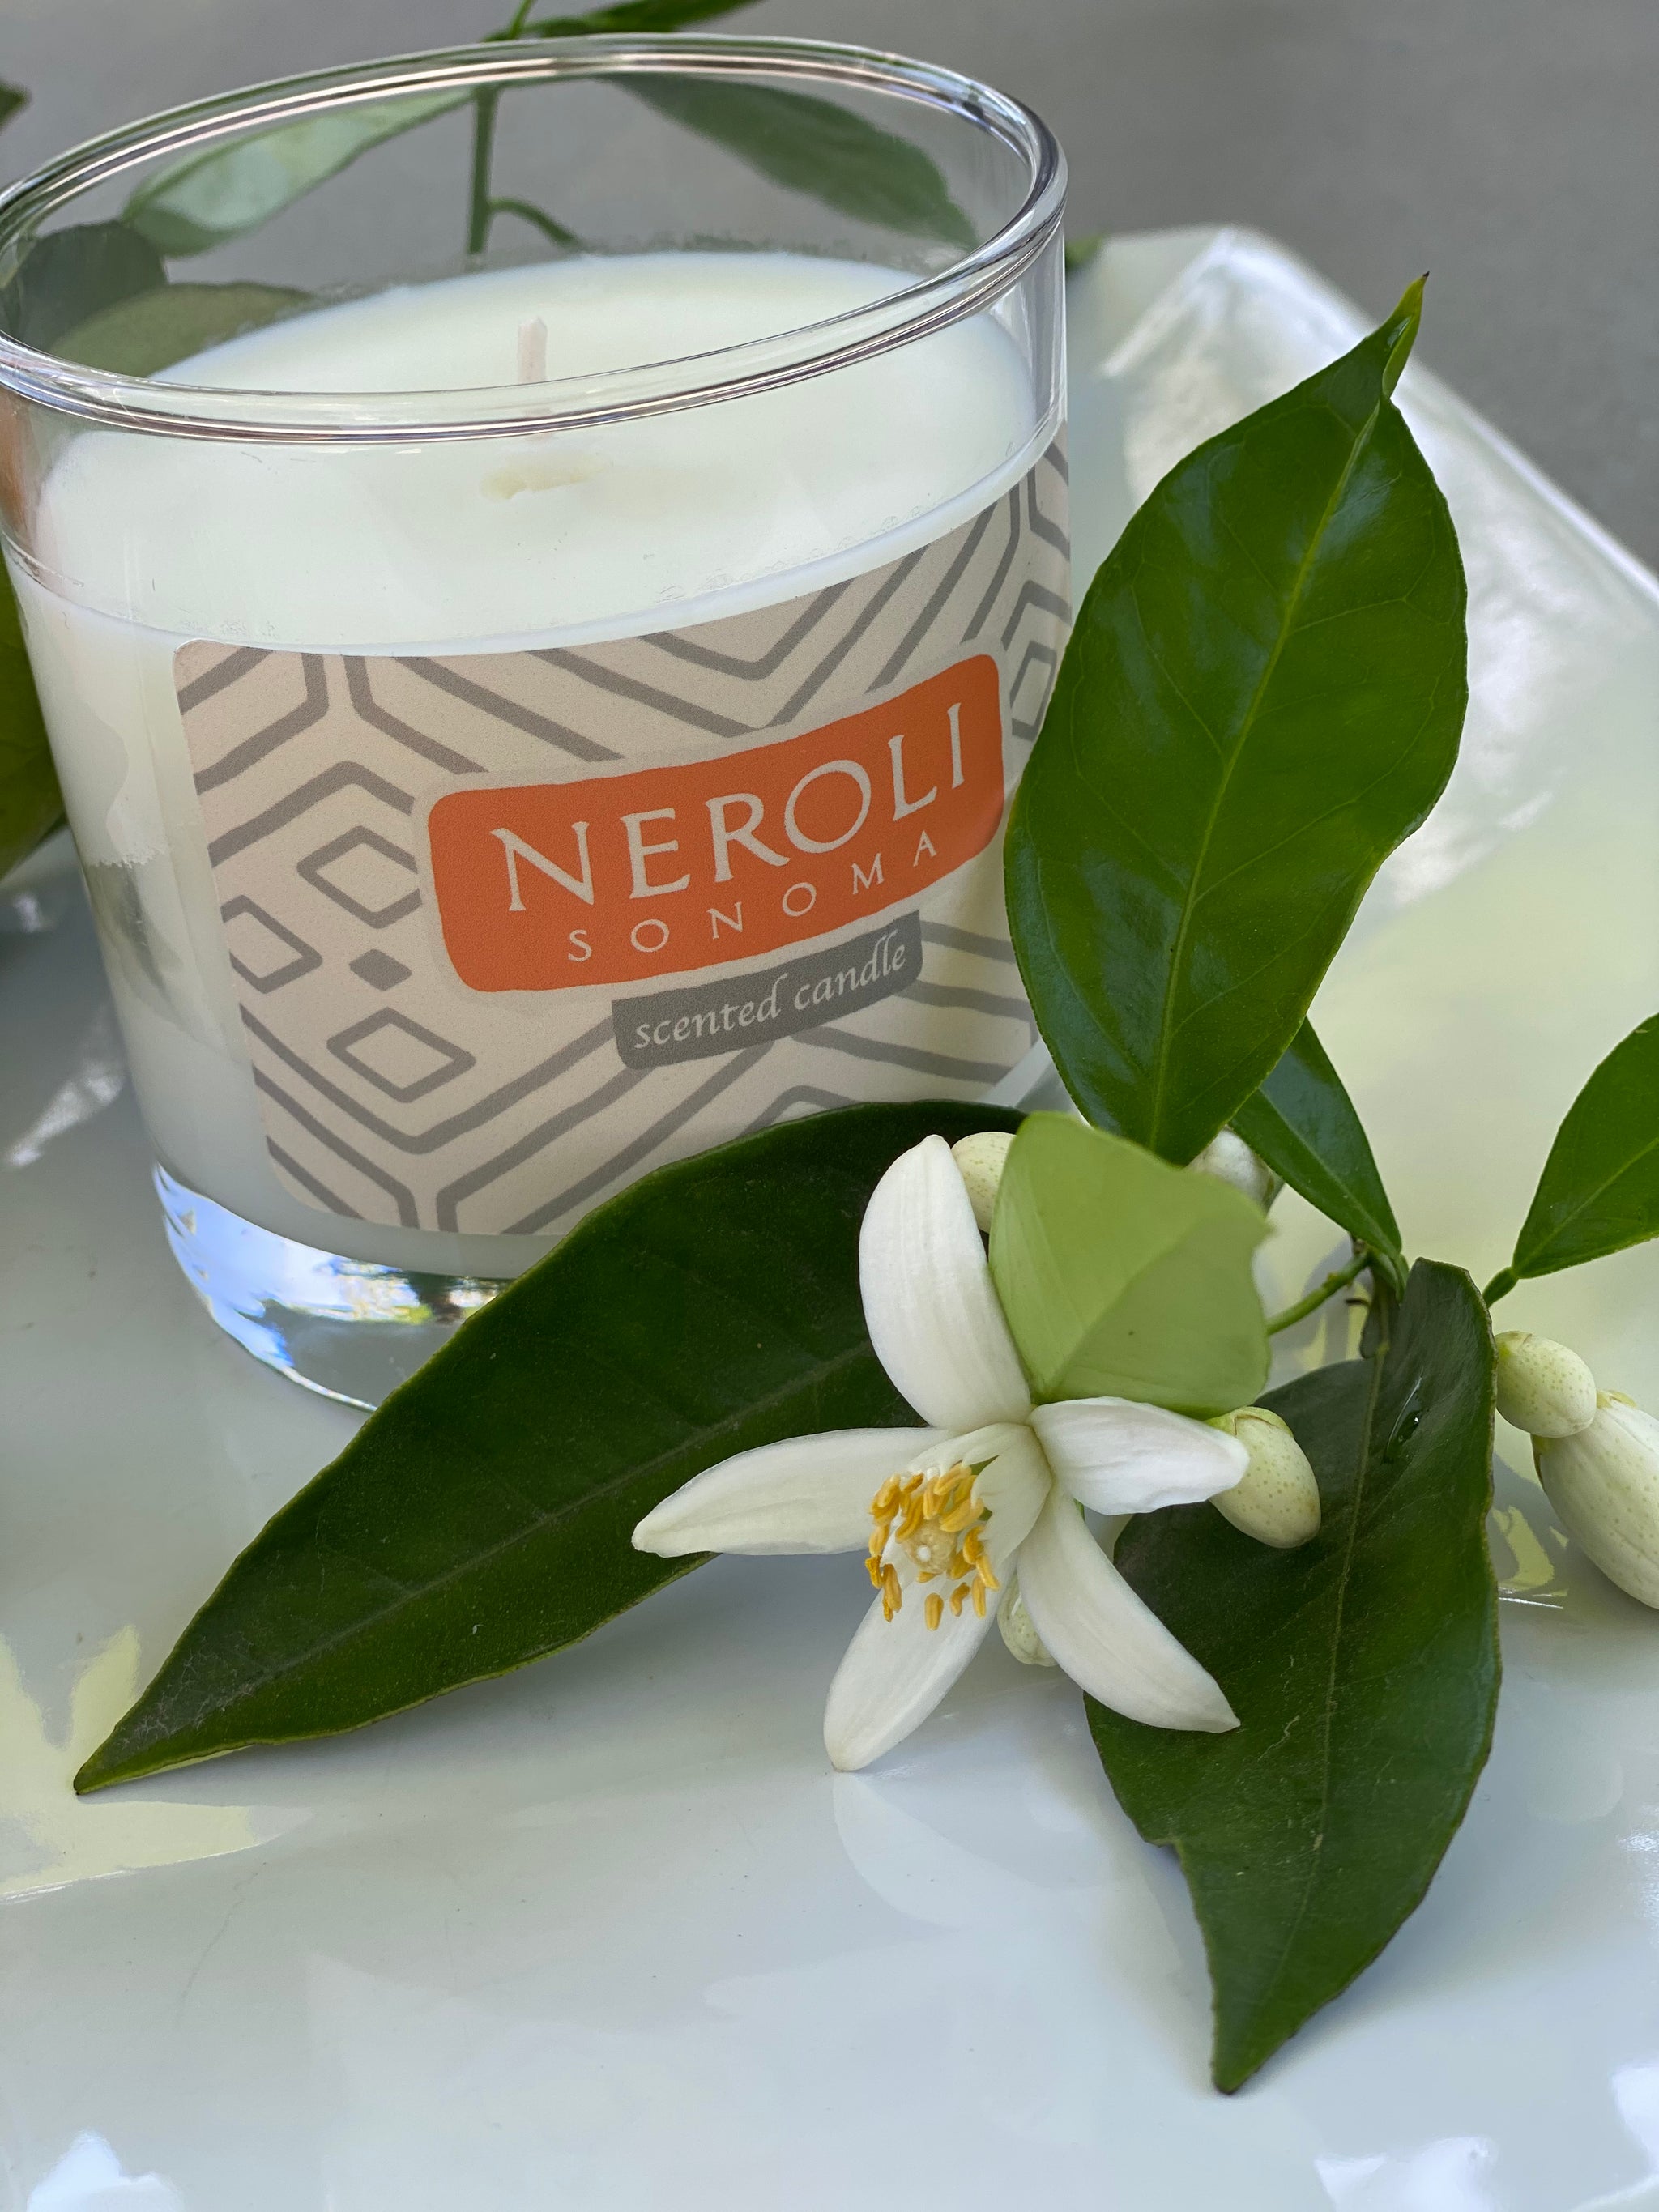 Neroli Sonoma Collection Candle